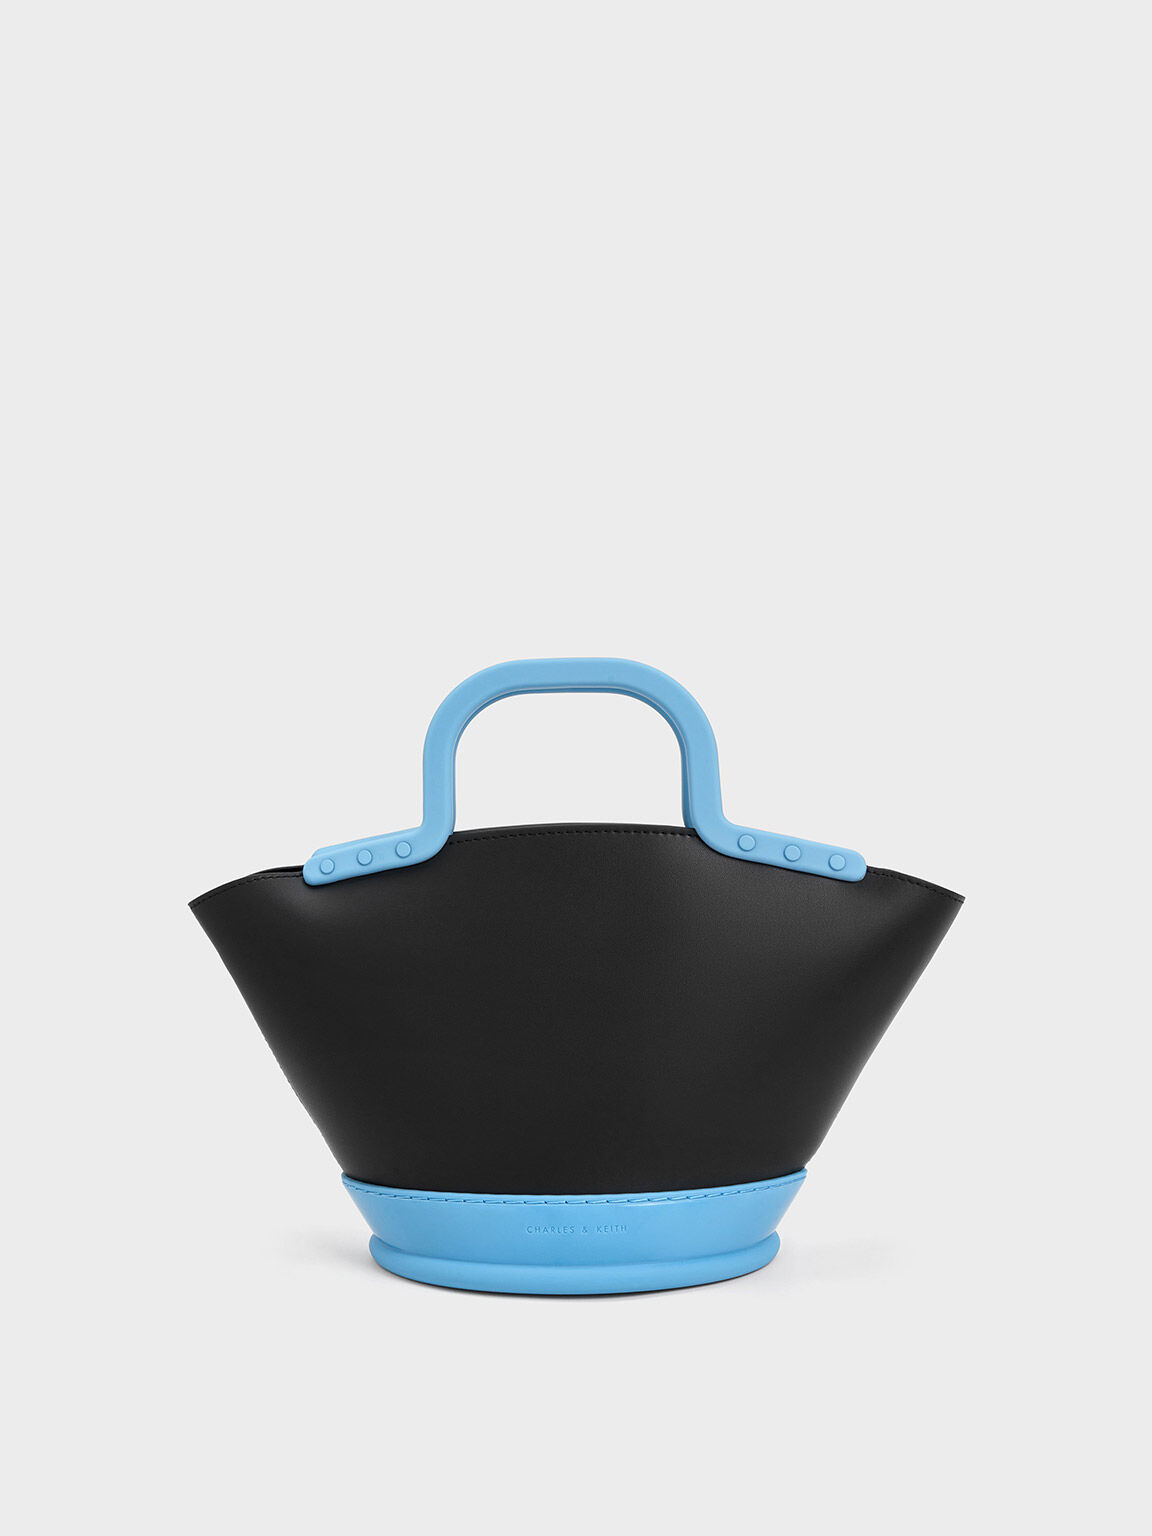 Double top handle tote bag – SCHANTY